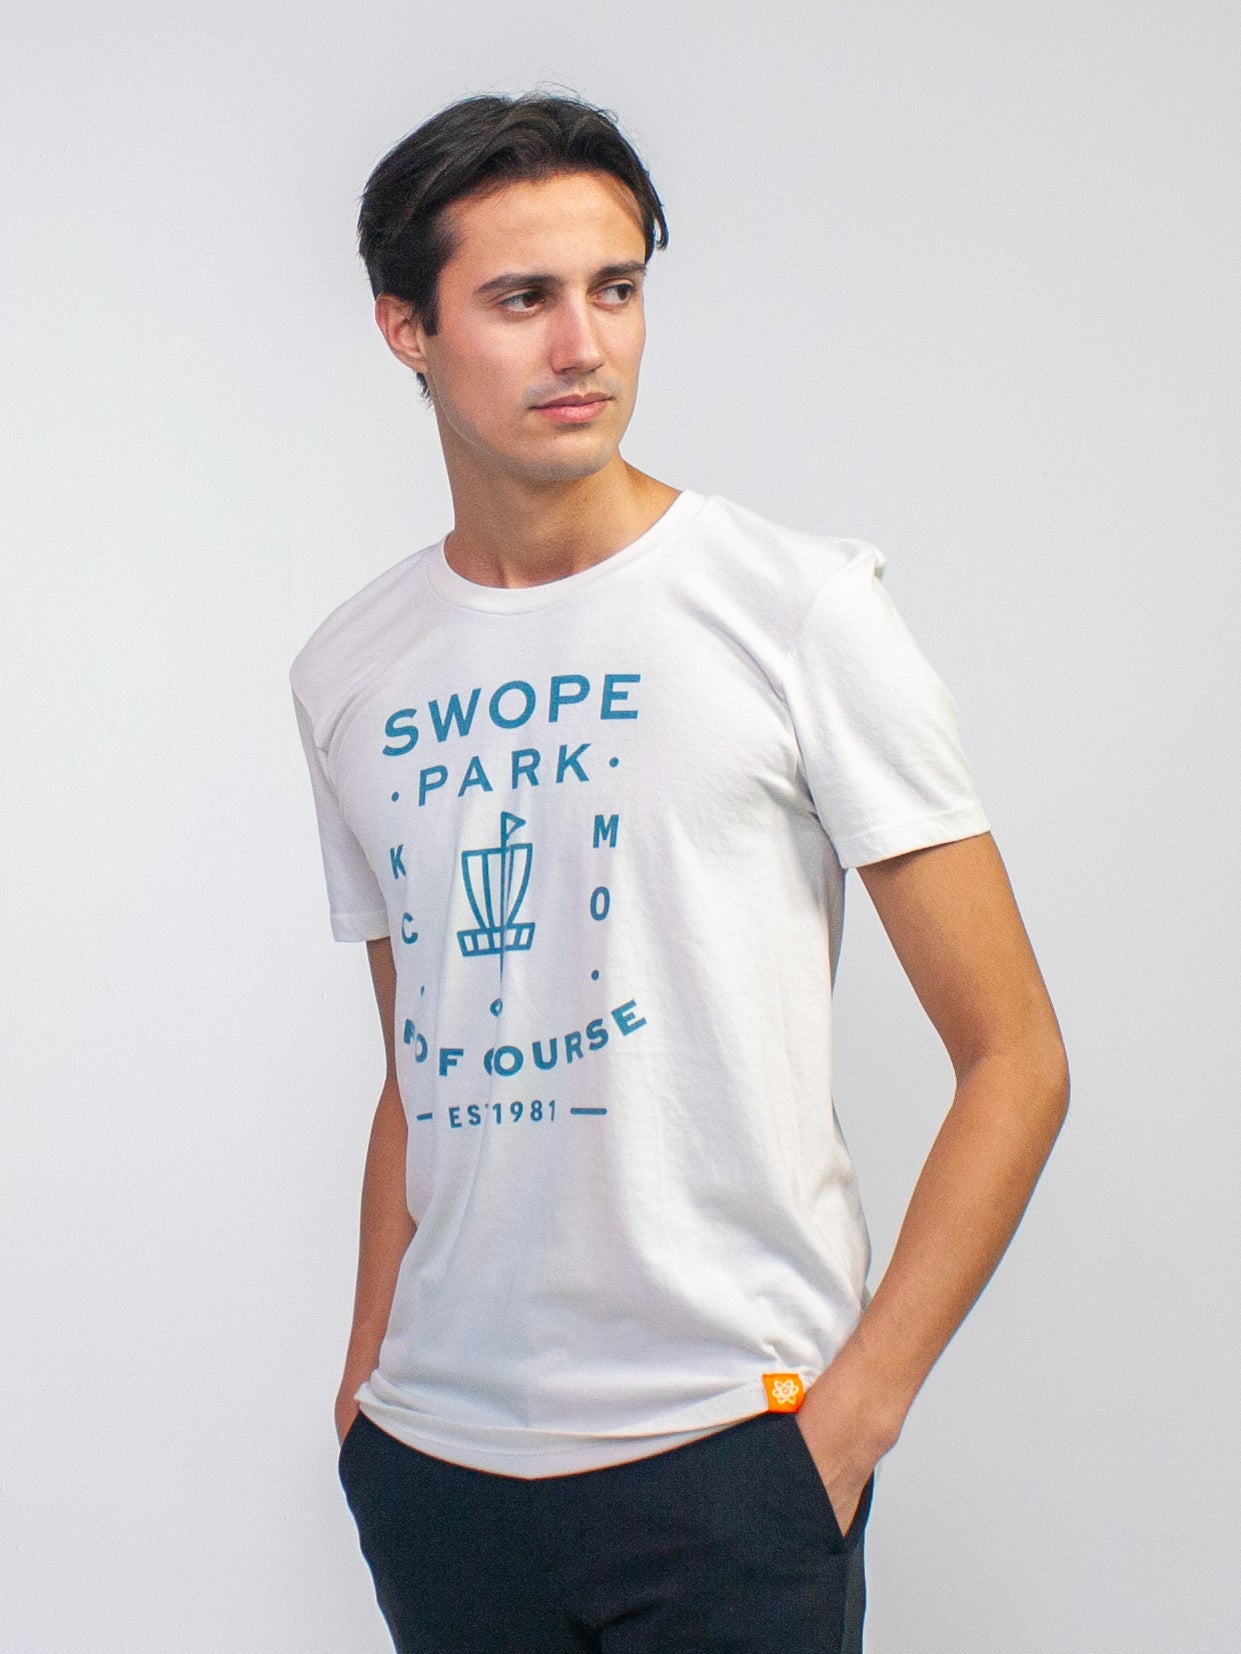 Swope Park Folf Course T-shirt